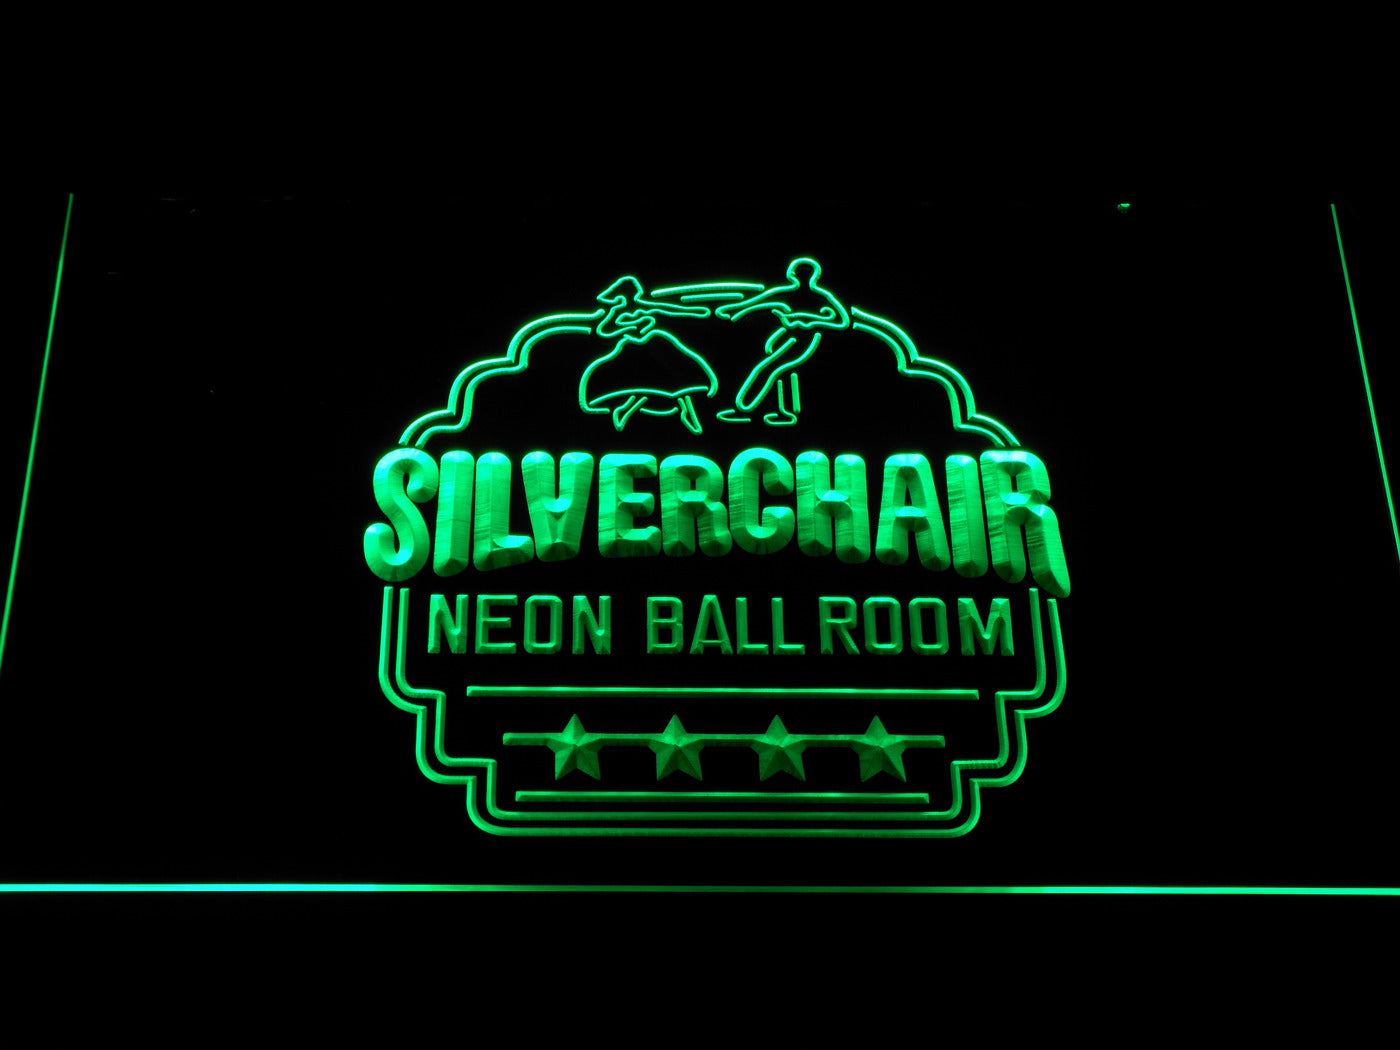 Silverchair Neon Ballroom LED Neon Sign